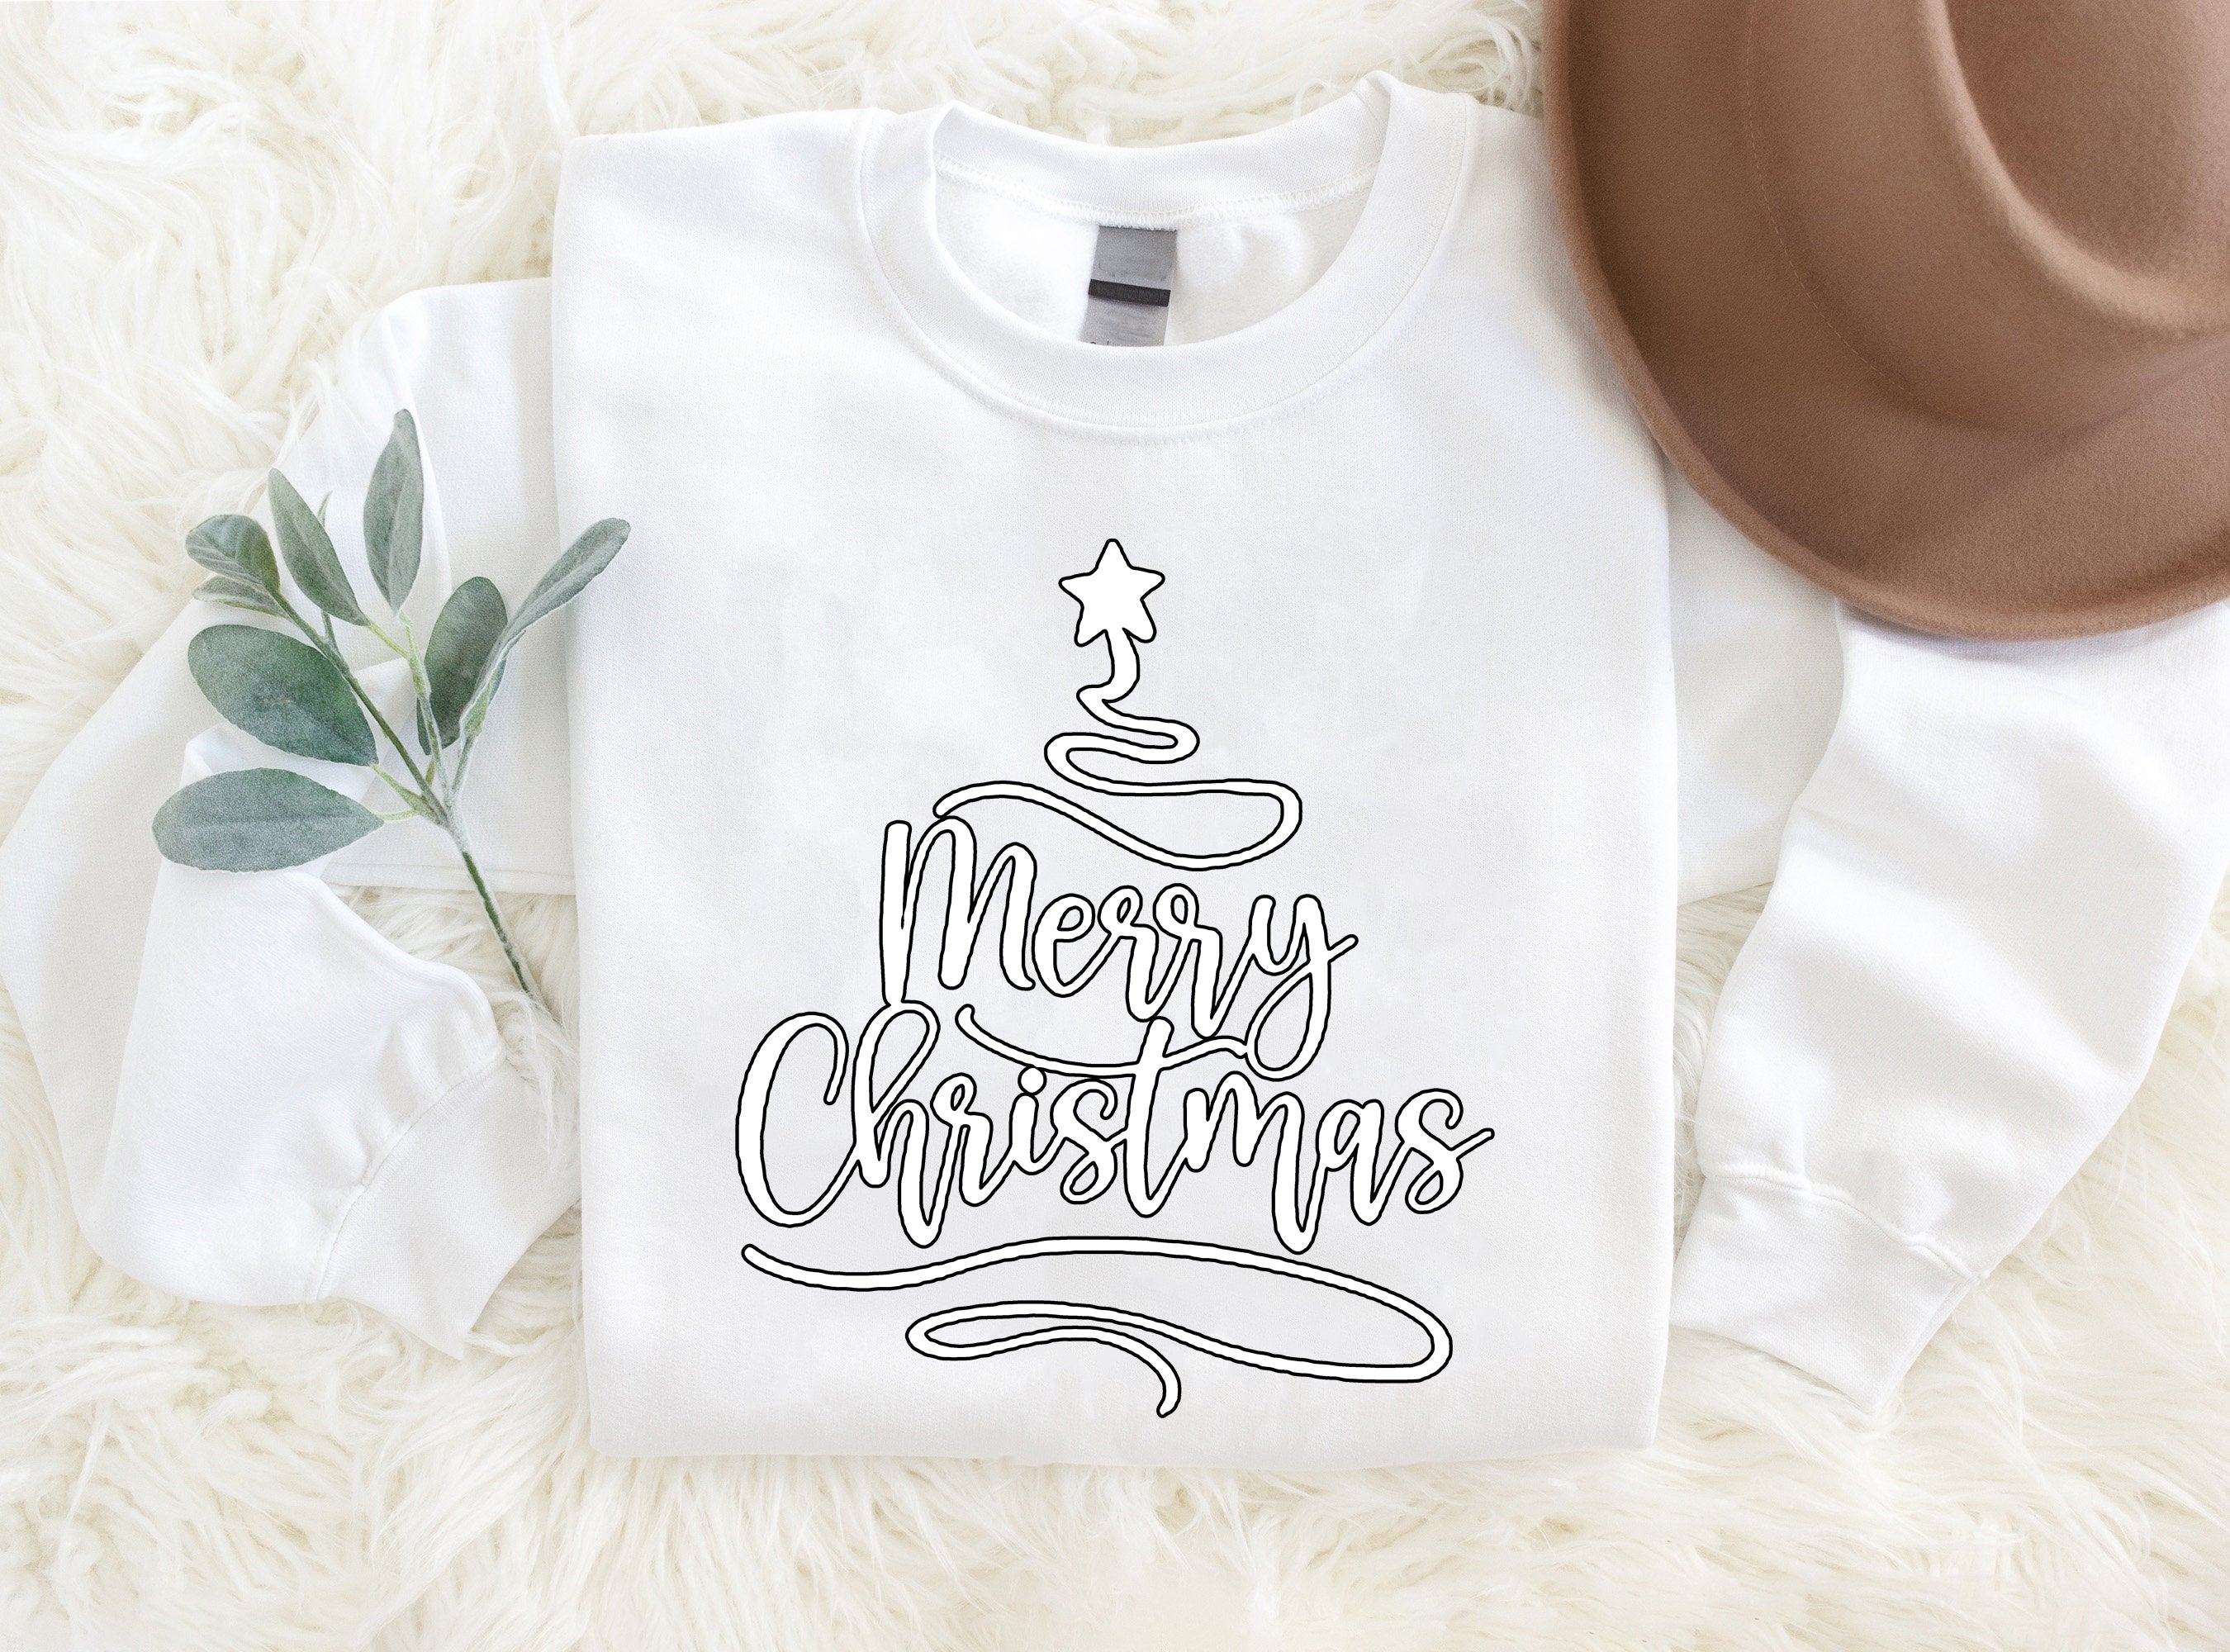 'Merry Chirstmas' Letter Pattern Family Christmas Matching Pajamas Tops Cute White Long Sleeve Sweatshirts With Dog Bandana